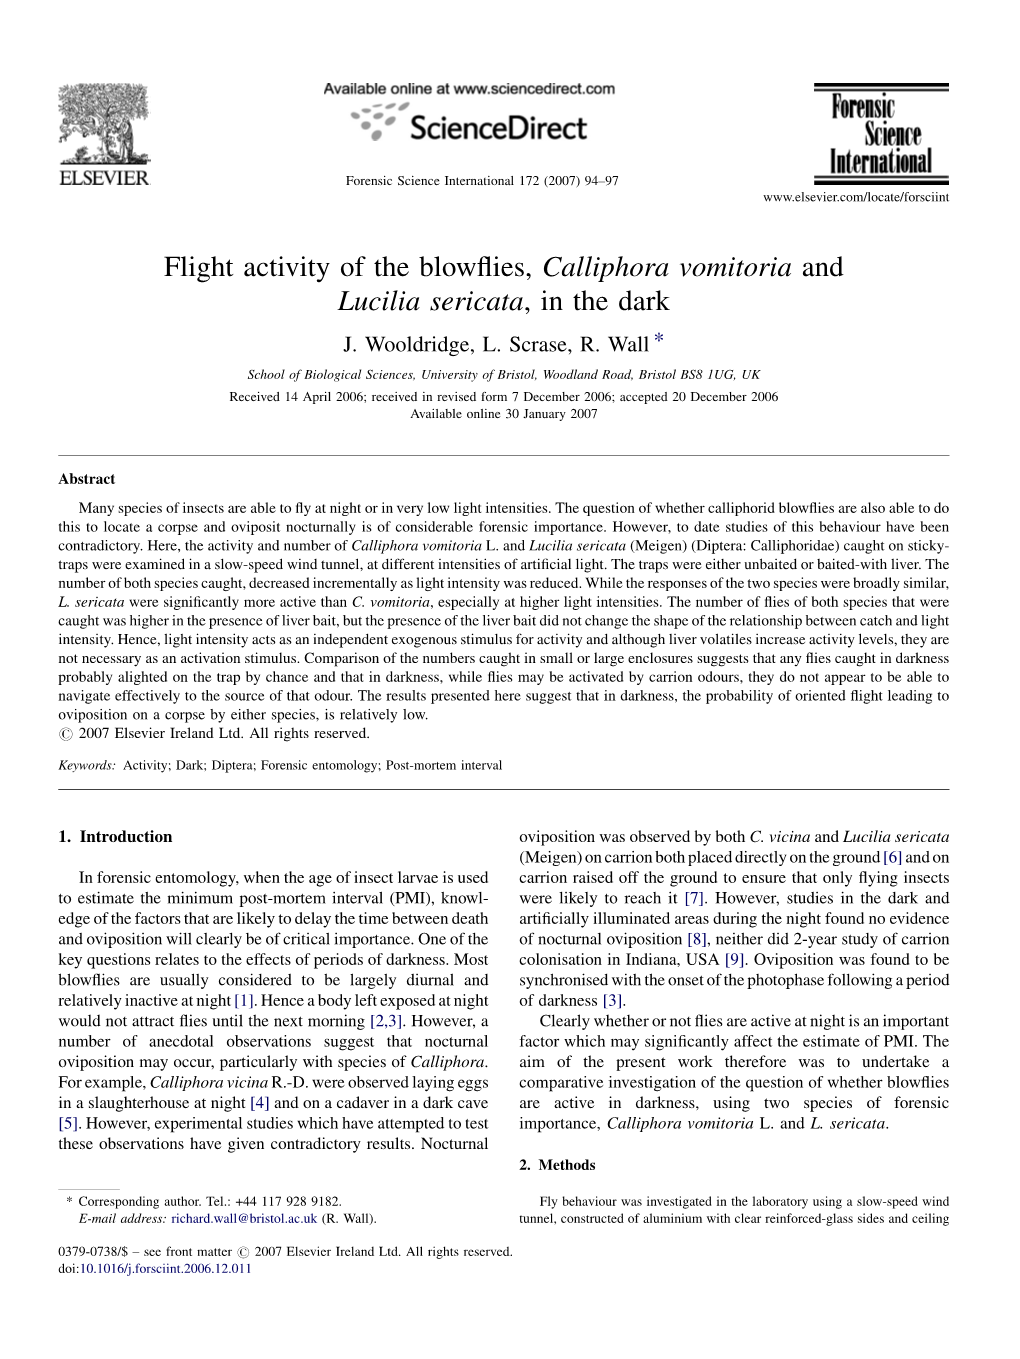 Flight Activity of the Blowflies, Calliphora Vomitoria and Lucilia Sericata, in the Dark